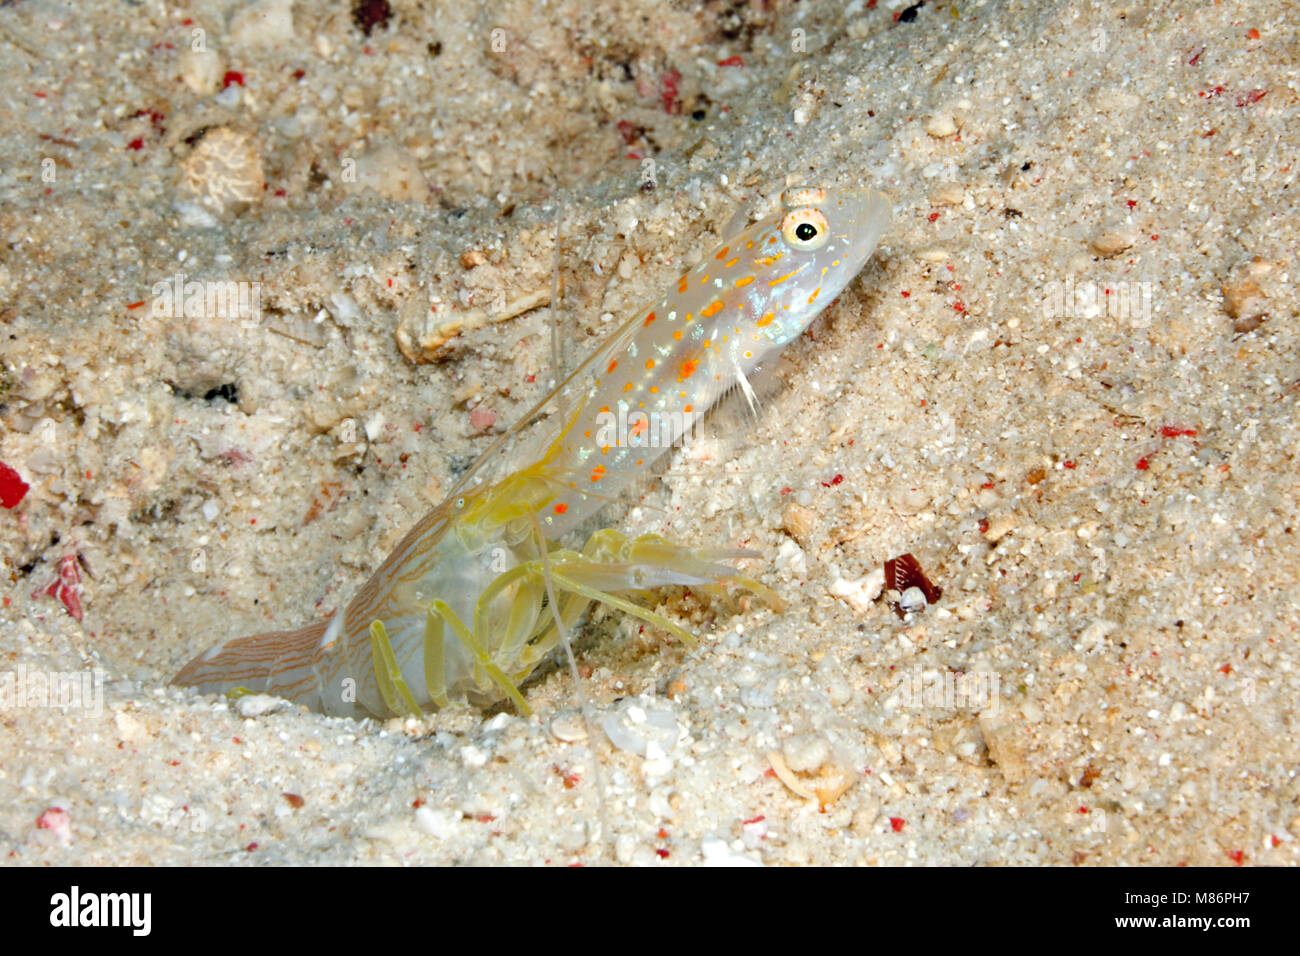 Mâts Shrimpgoby Alpheid Ctenogobiops tangaroai, et les crevettes, Alpheus ochrostriatus. Banque D'Images